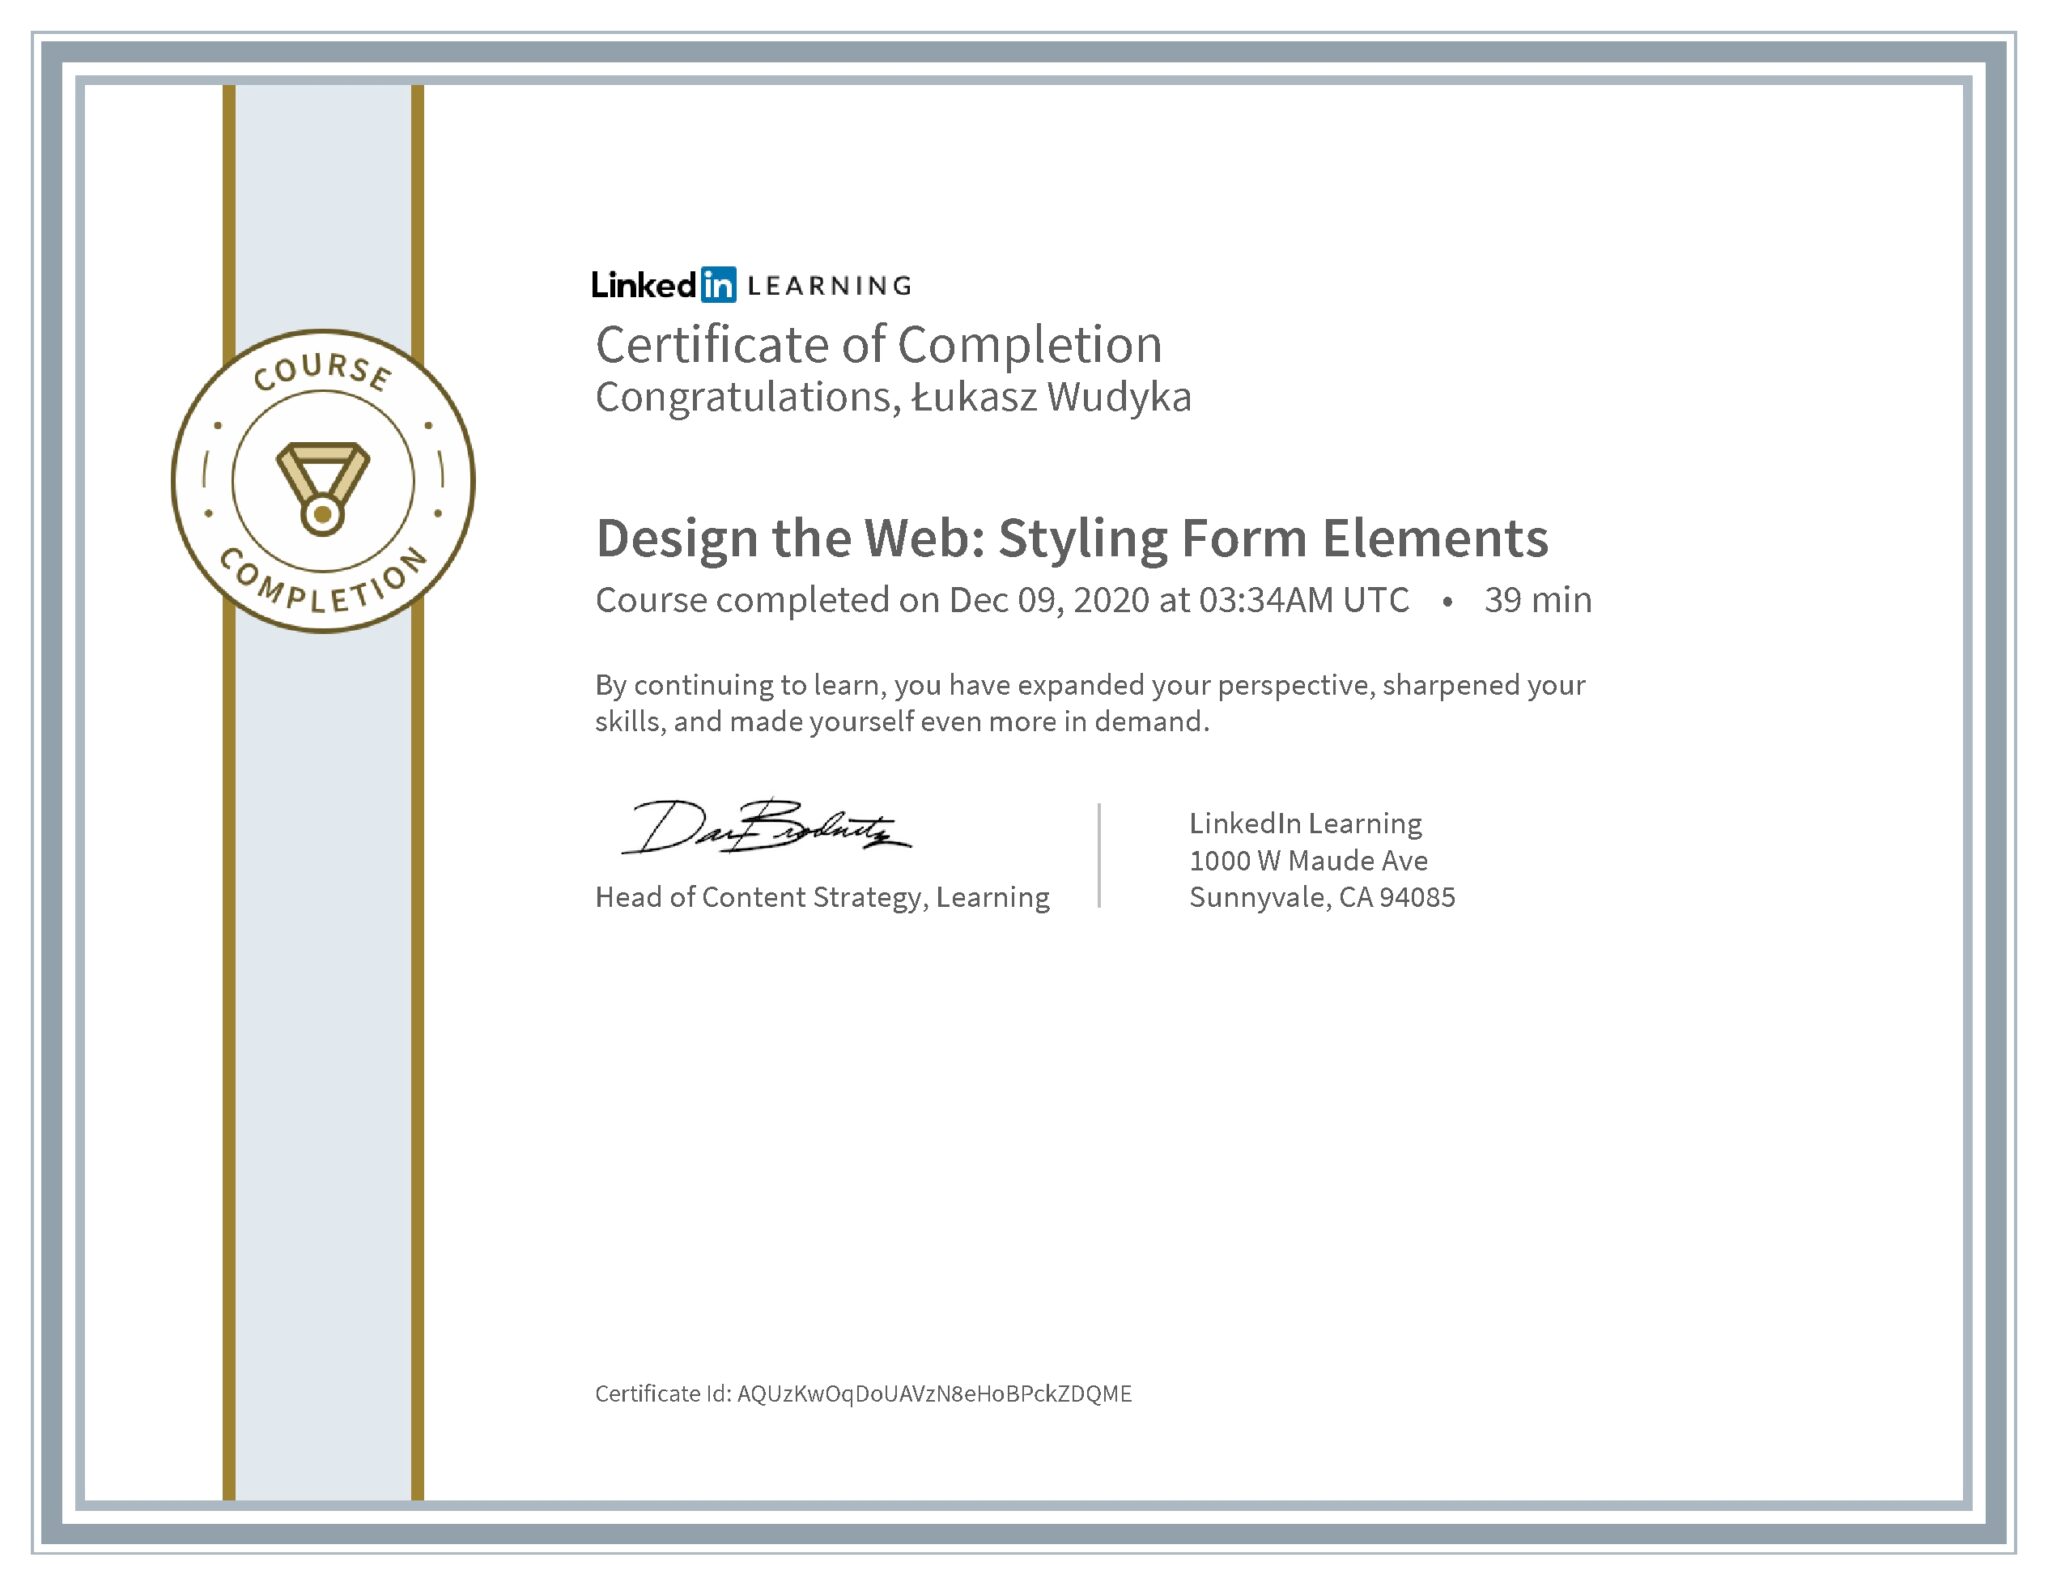 Łukasz Wudyka certyfikat LinkedIn Design the Web: Styling Form Elements